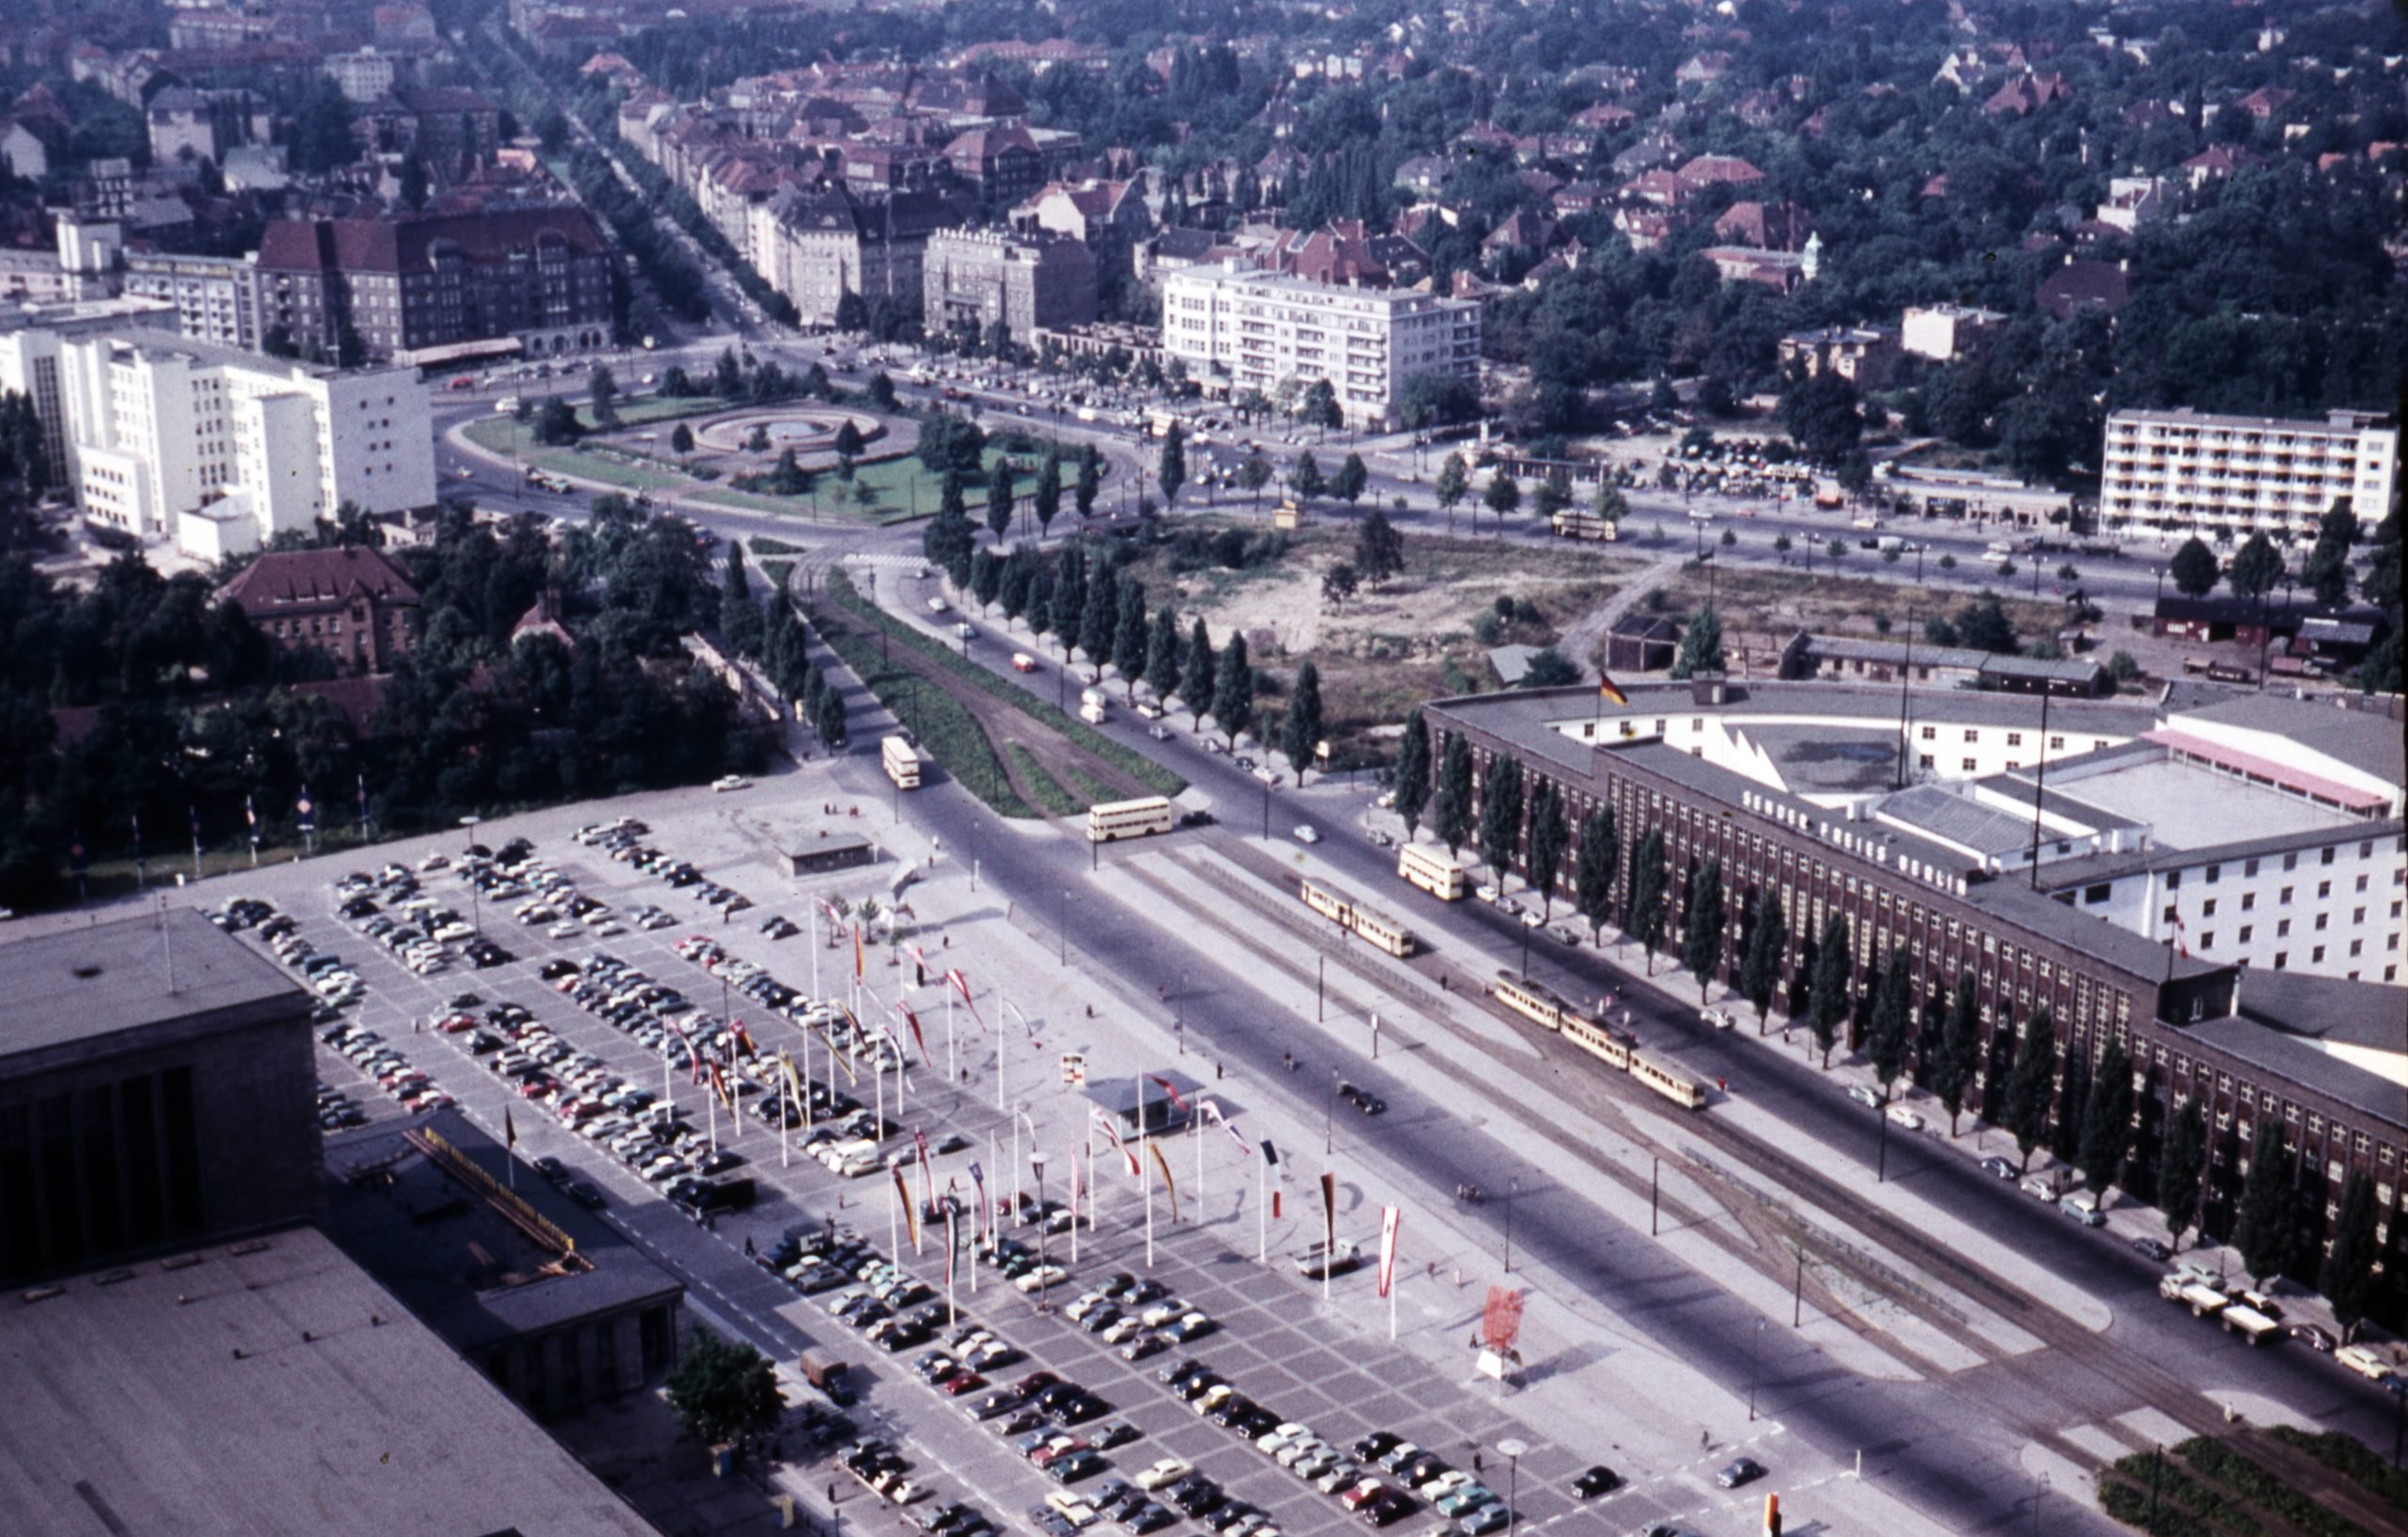 Trade fair car park, broadcasting center – and many villas: Westend from the air, around 1958. Photo: Imago/Gerhard Leber